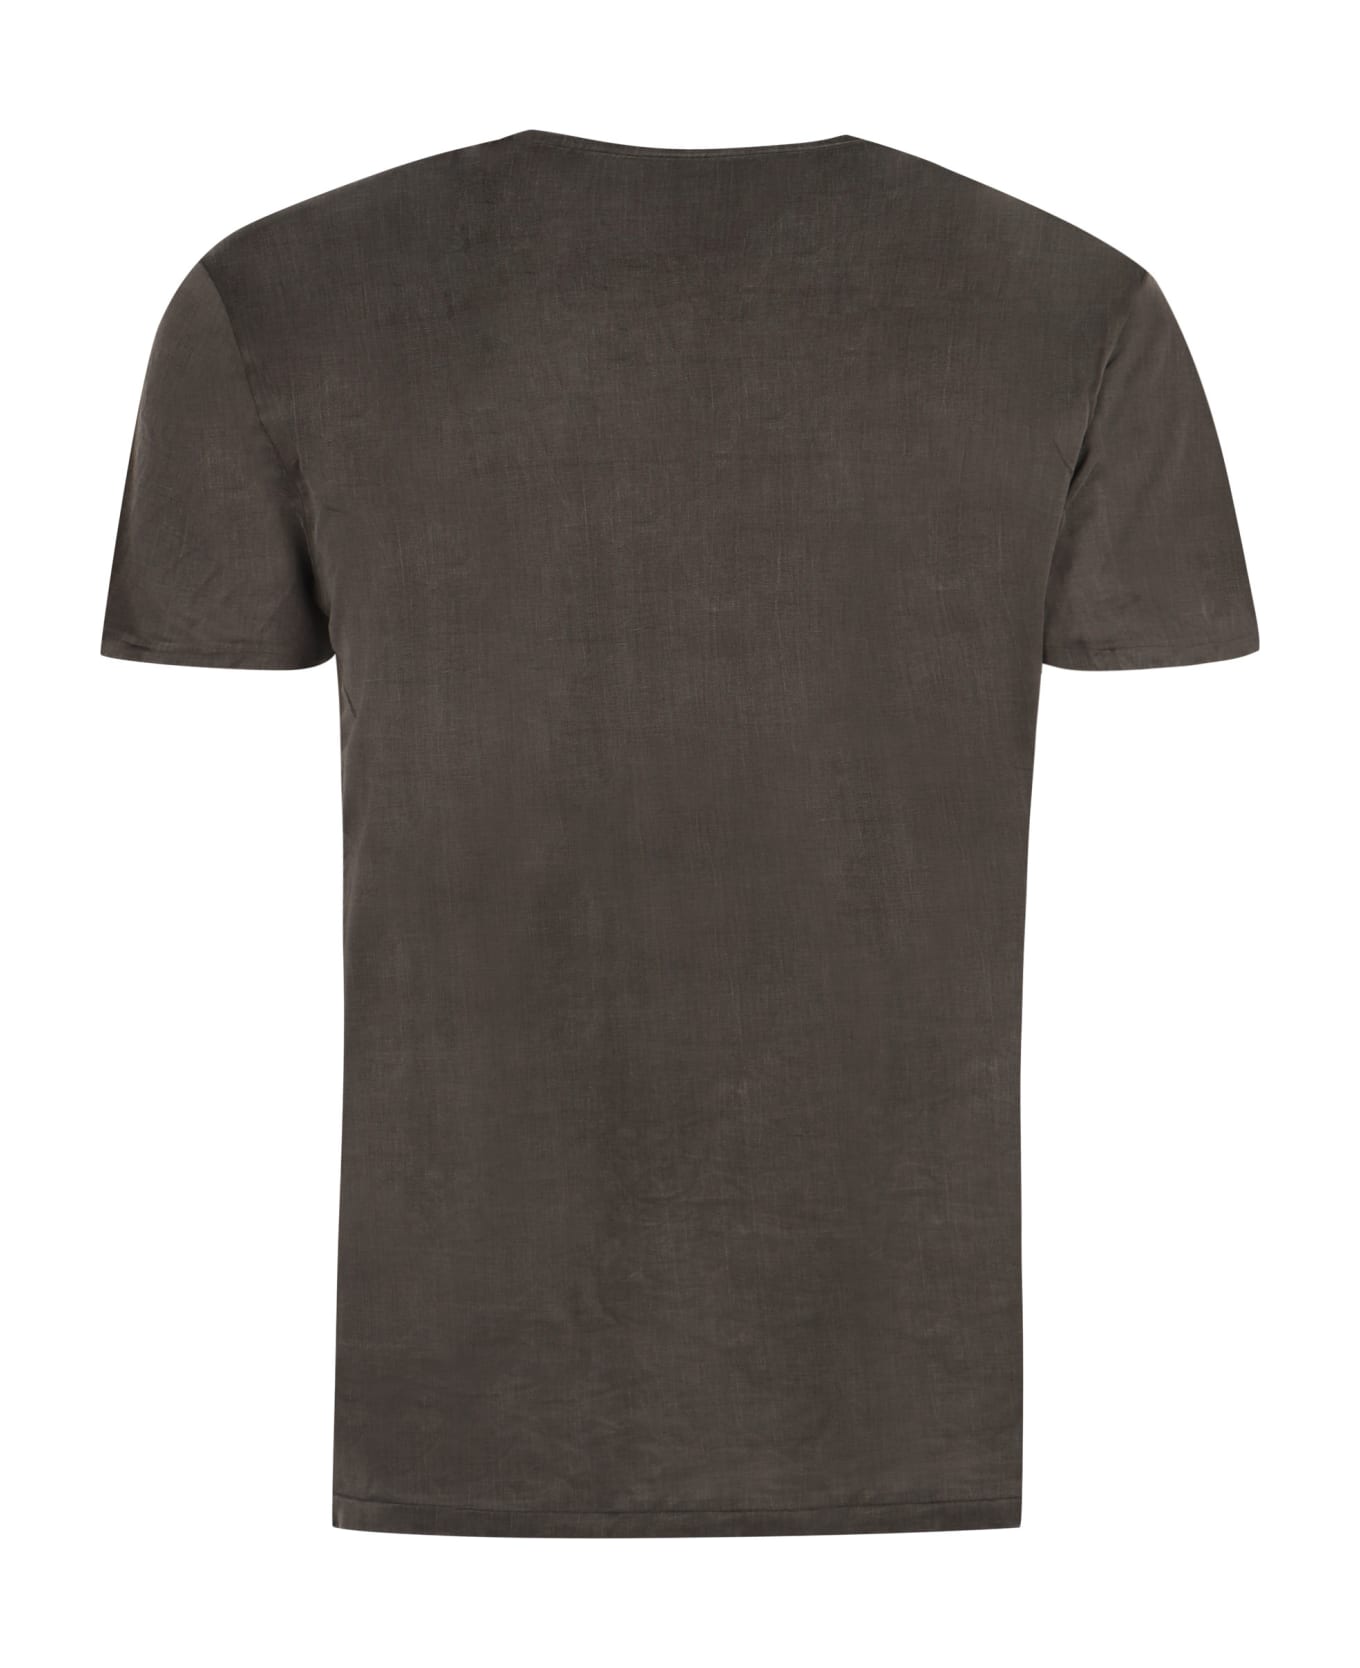 RRD - Roberto Ricci Design Short Sleeve T-shirt - Brown